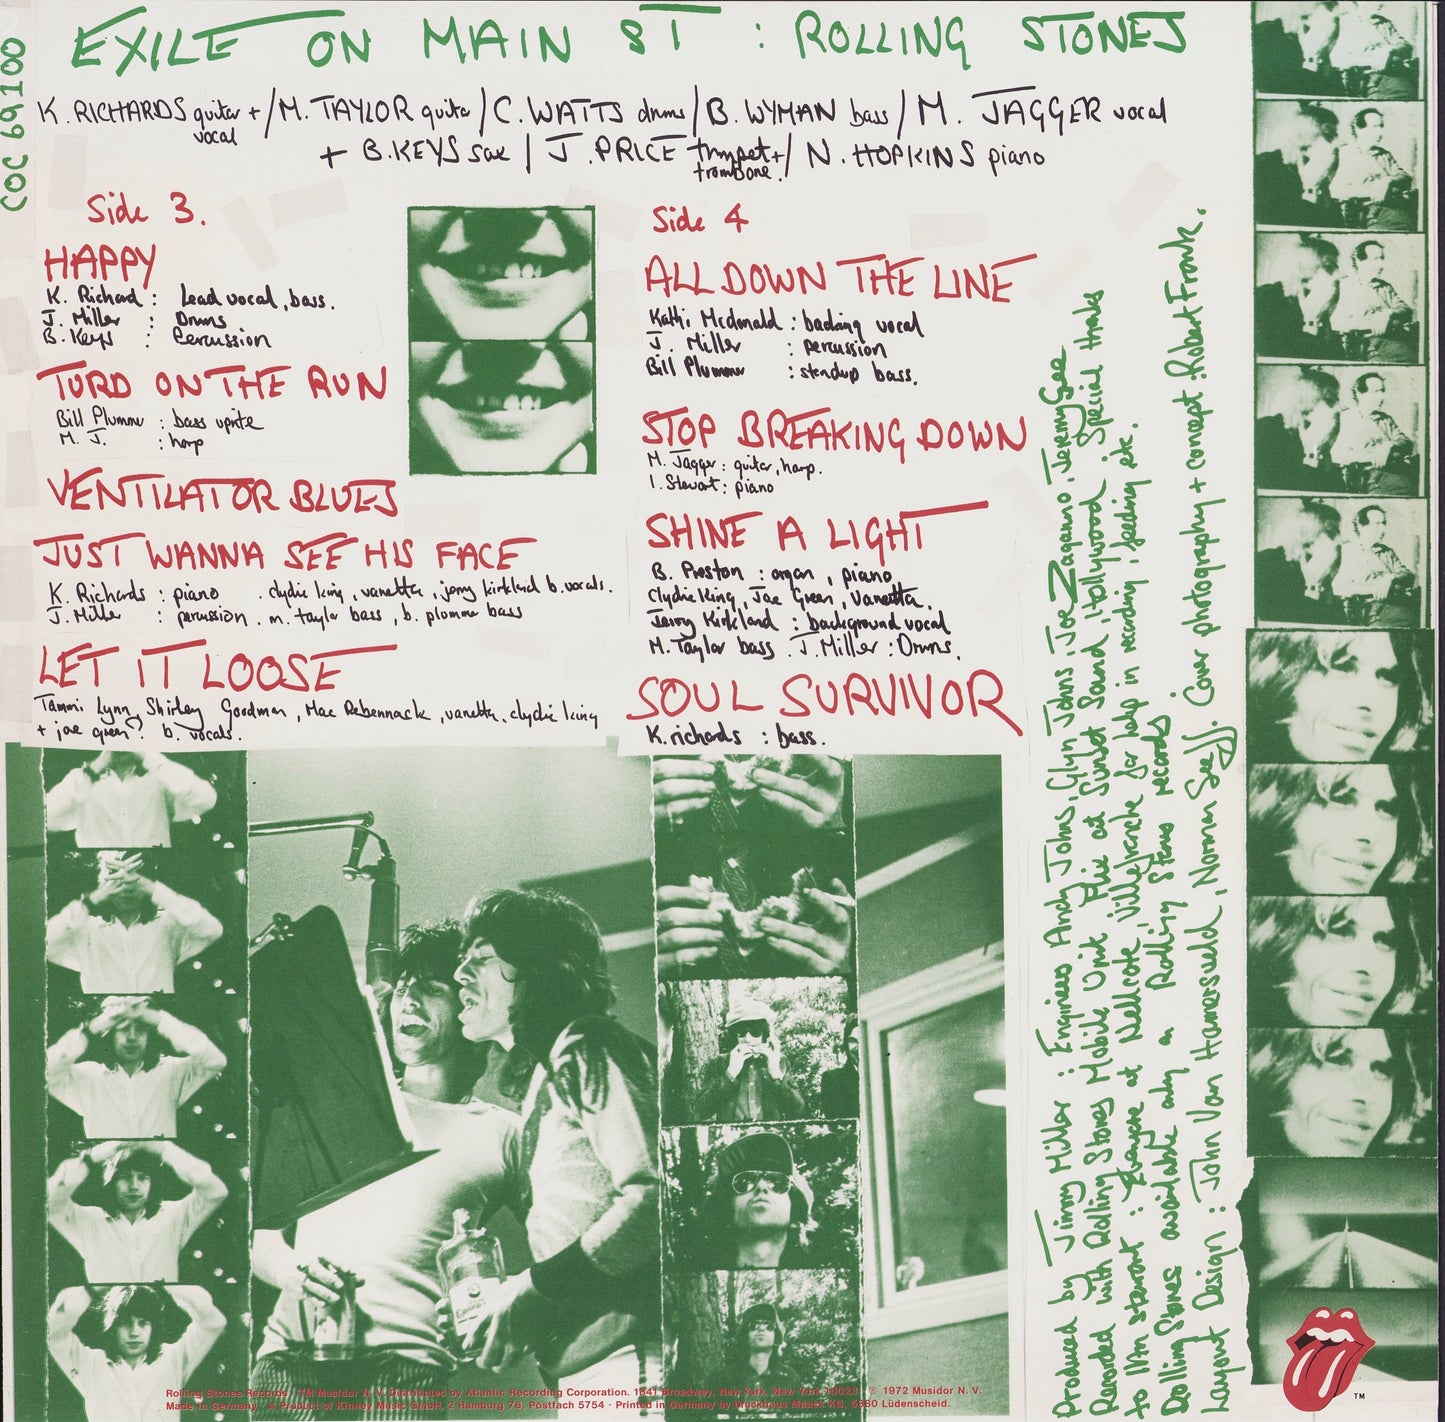 Rolling Stones - Exile On Main St (Vinyl 2LP)